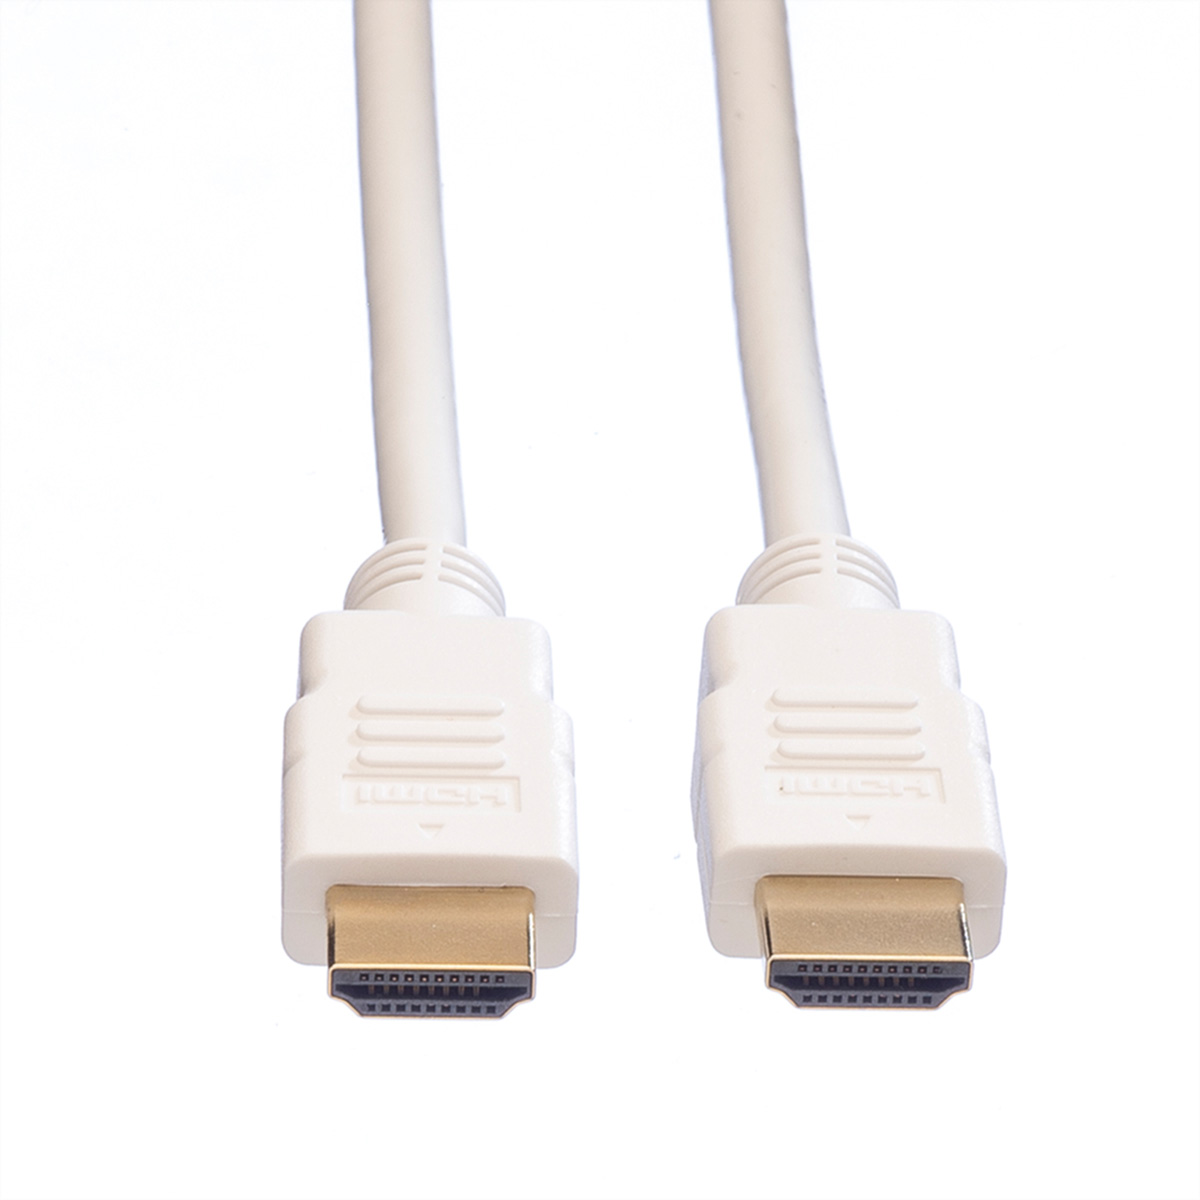 ROLINE HDMI High Speed Kabel Kabel Ethernet Ethernet HDMI mit Speed High mit